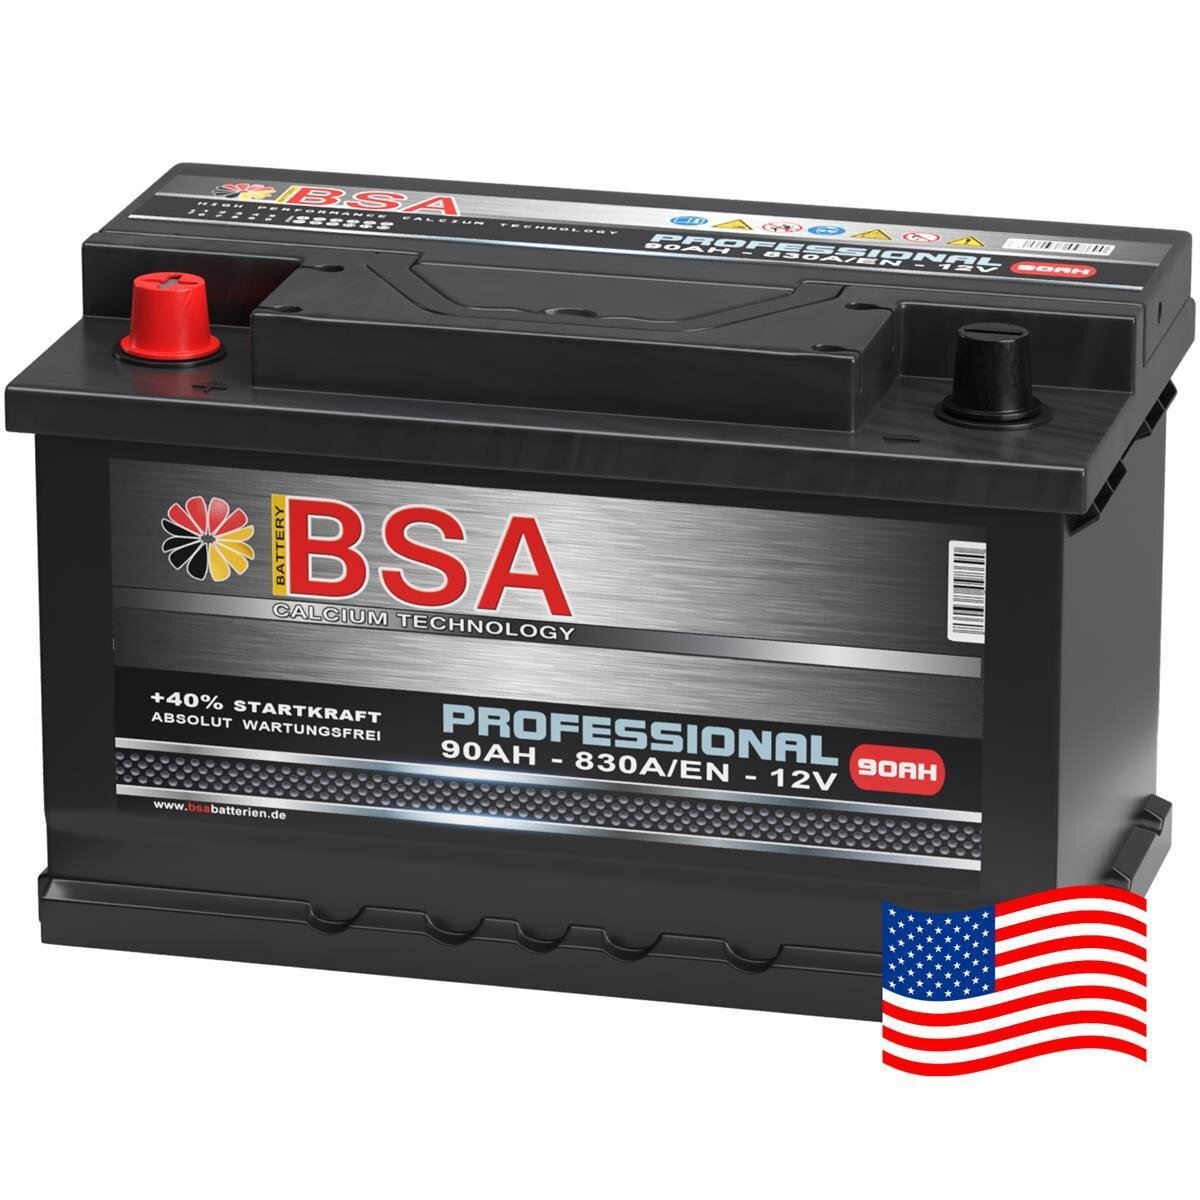 BSA US Professional Autobatterie 62Ah 12V, 73,90 €